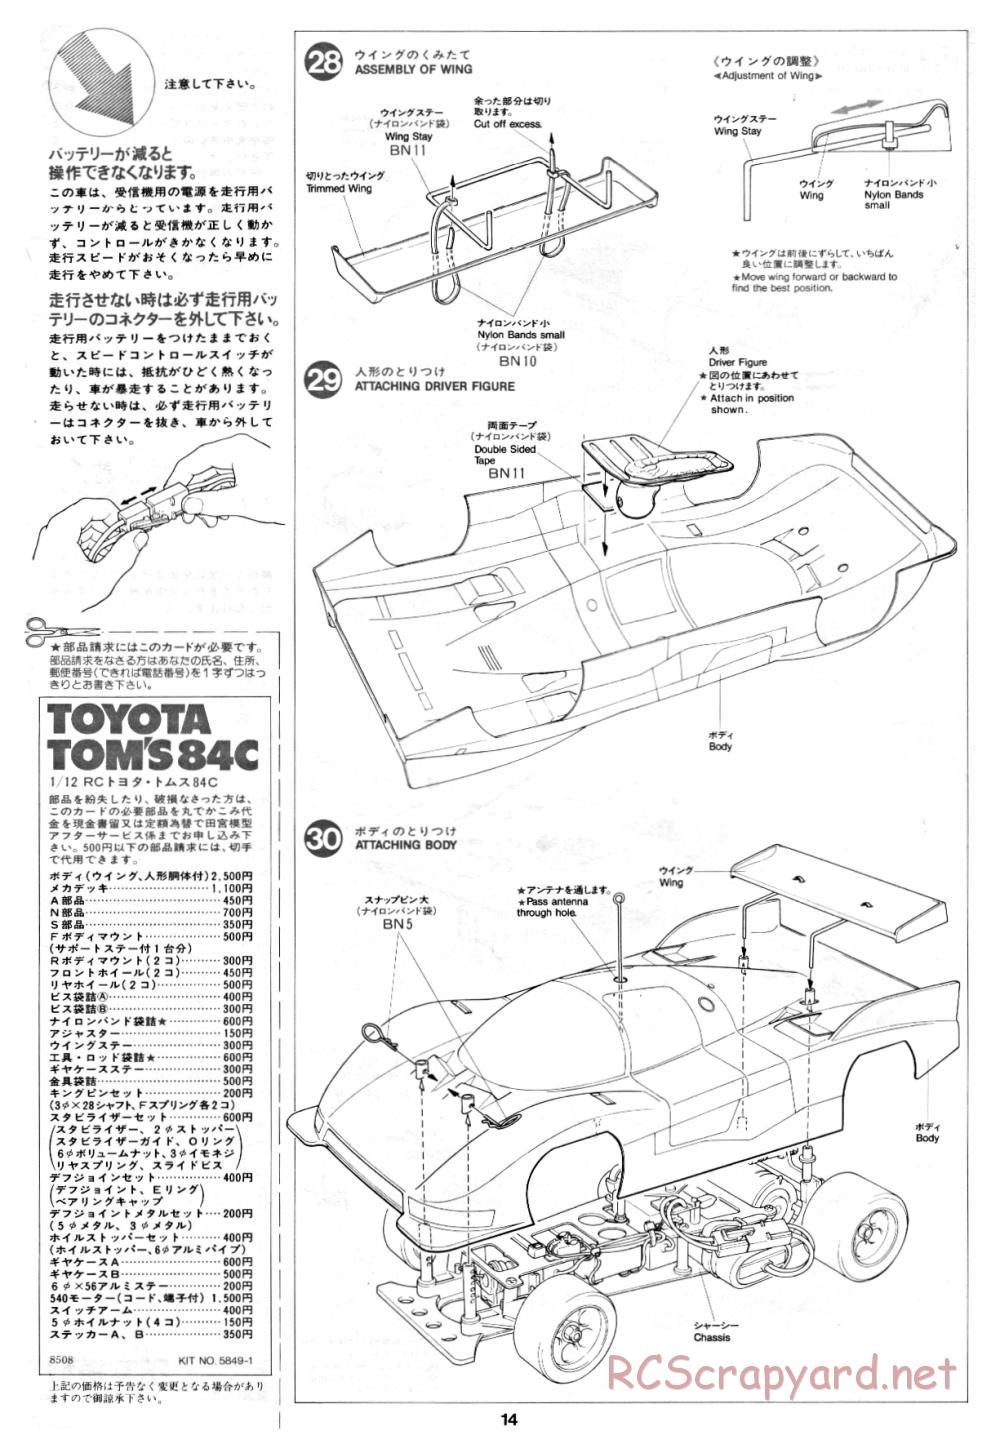 Tamiya - Toyota Tom's 84C - RM MK.6 - 58049 - Manual - Page 14